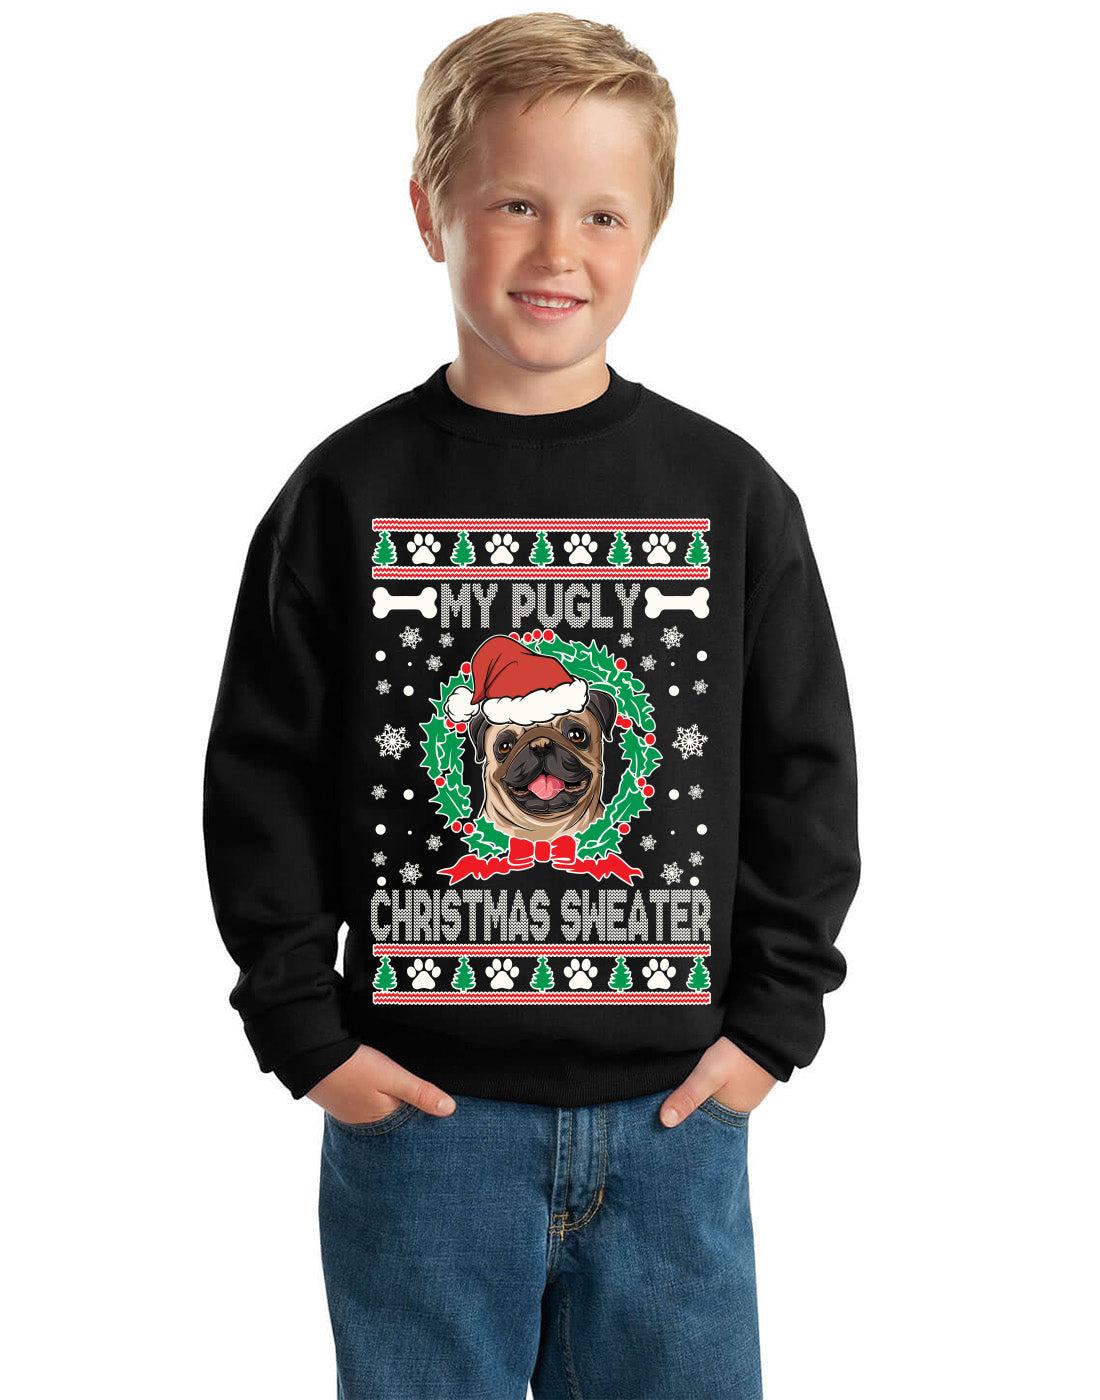 My Pugly Christmas Sweater Ugly Christmas Sweater Unisex Boys Girls Crewneck Graphic Sweatshirt